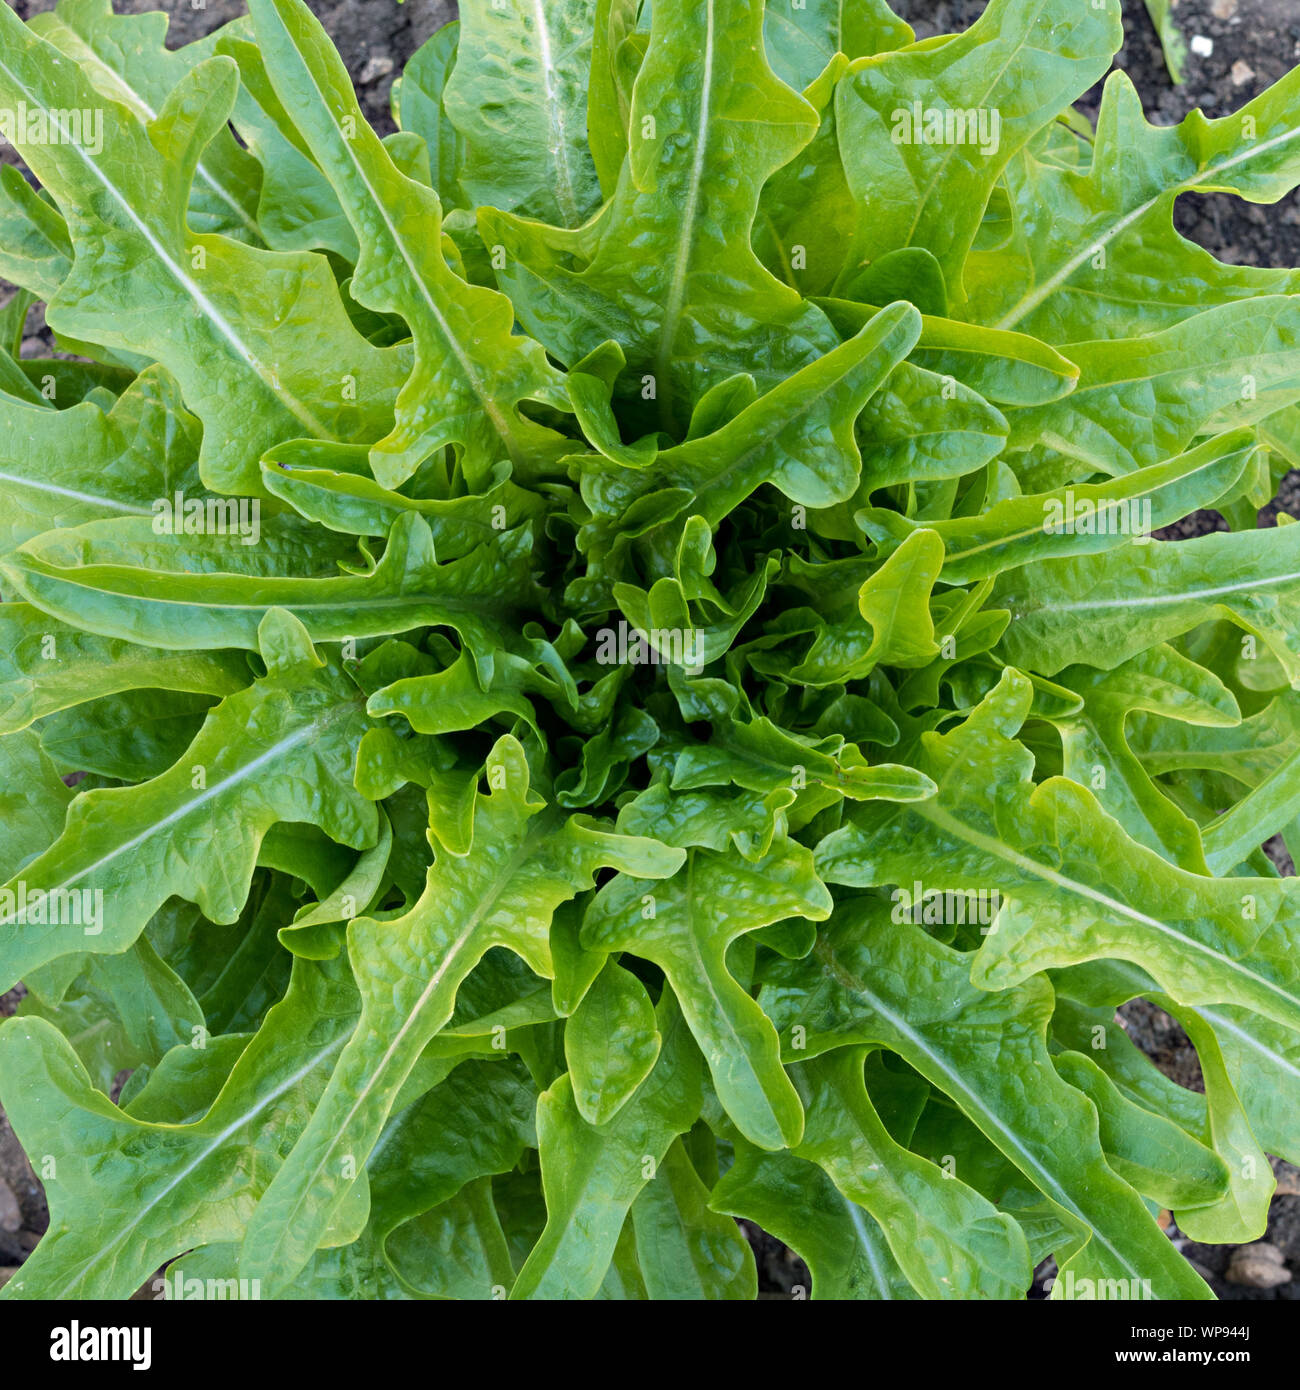 Closeup of Catalogna Cocarde (Lactuca sativa 'Cocarde') green lettuce plant growing in vegetable garden, England, UK Stock Photo